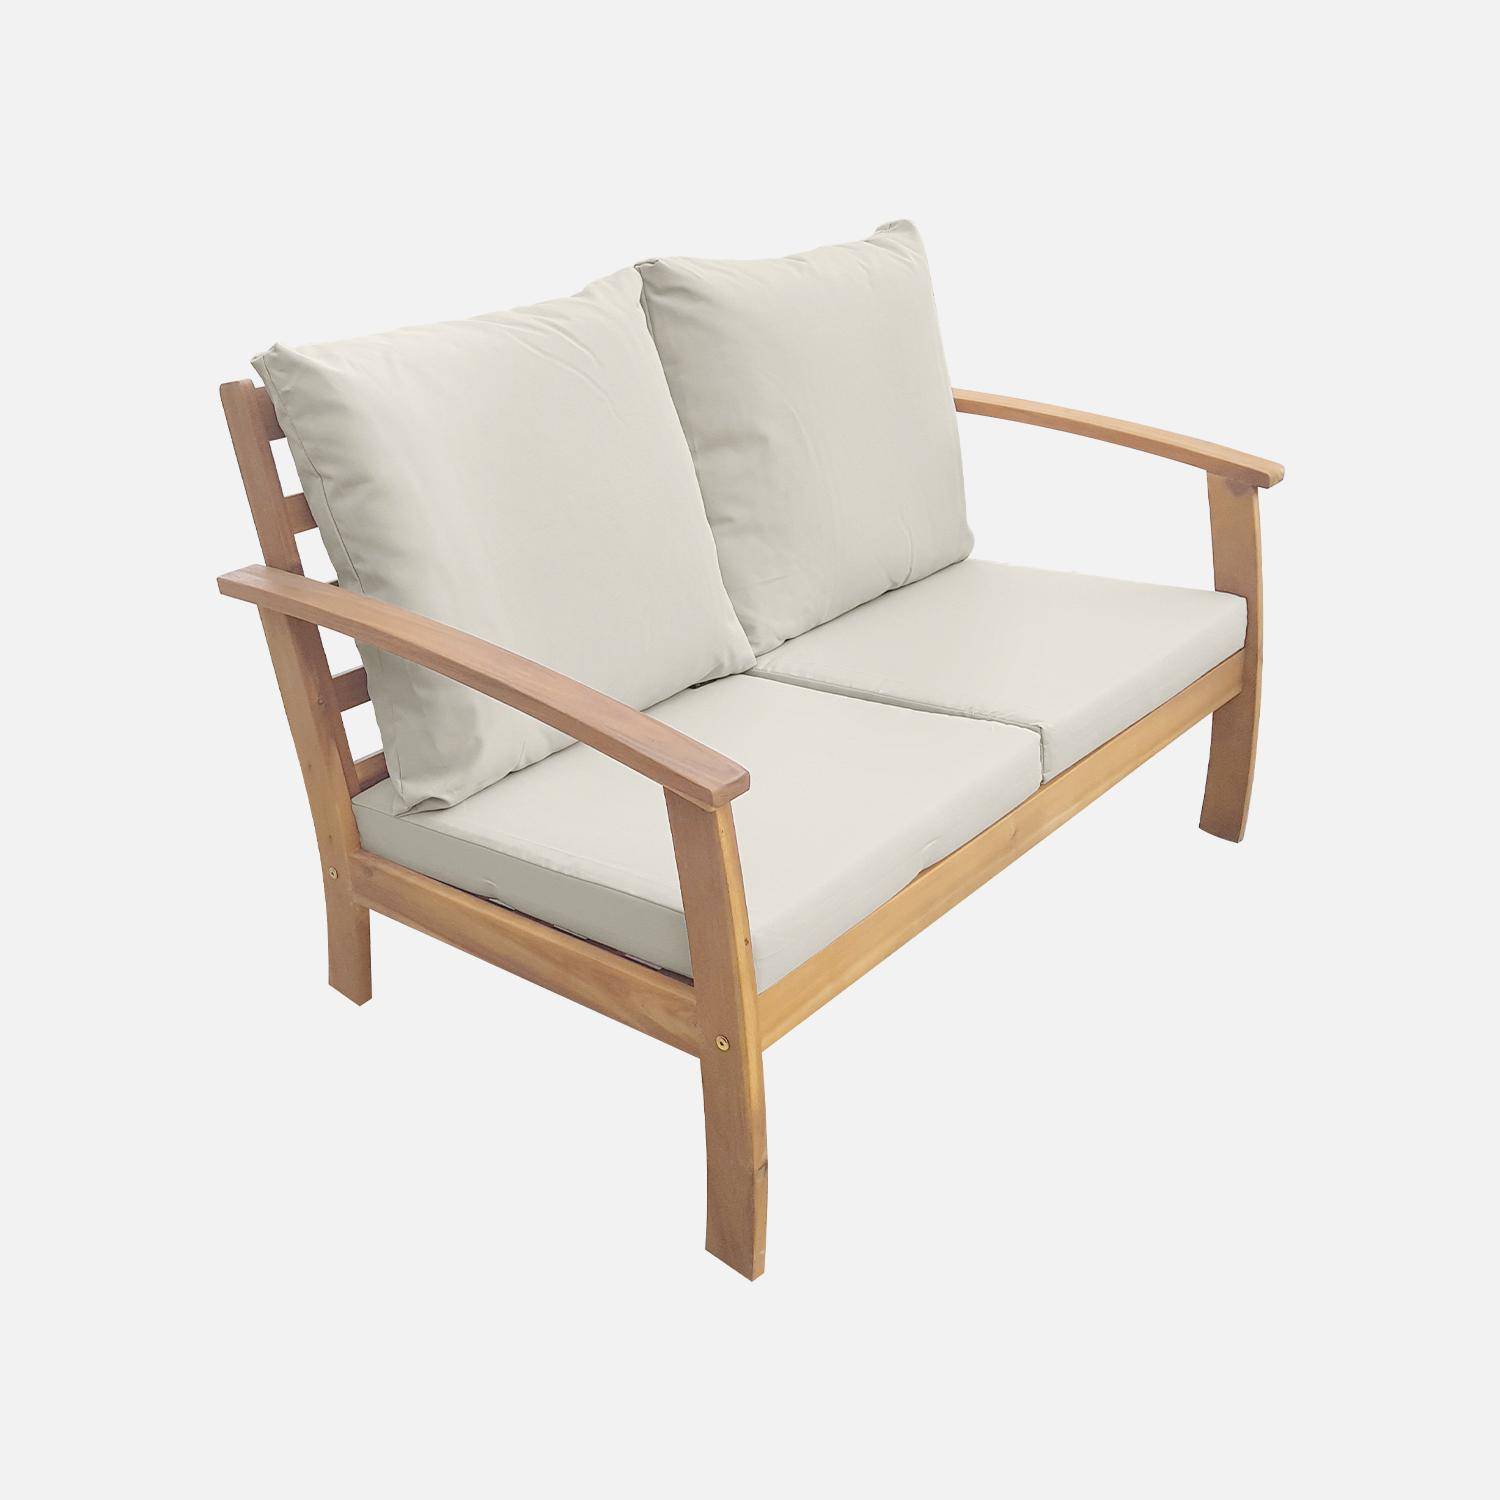 4-seater wooden garden sofa - Acacia wood sofa, armchairs and coffee table, designer piece  - Ushuaia - Off-white,sweeek,Photo3